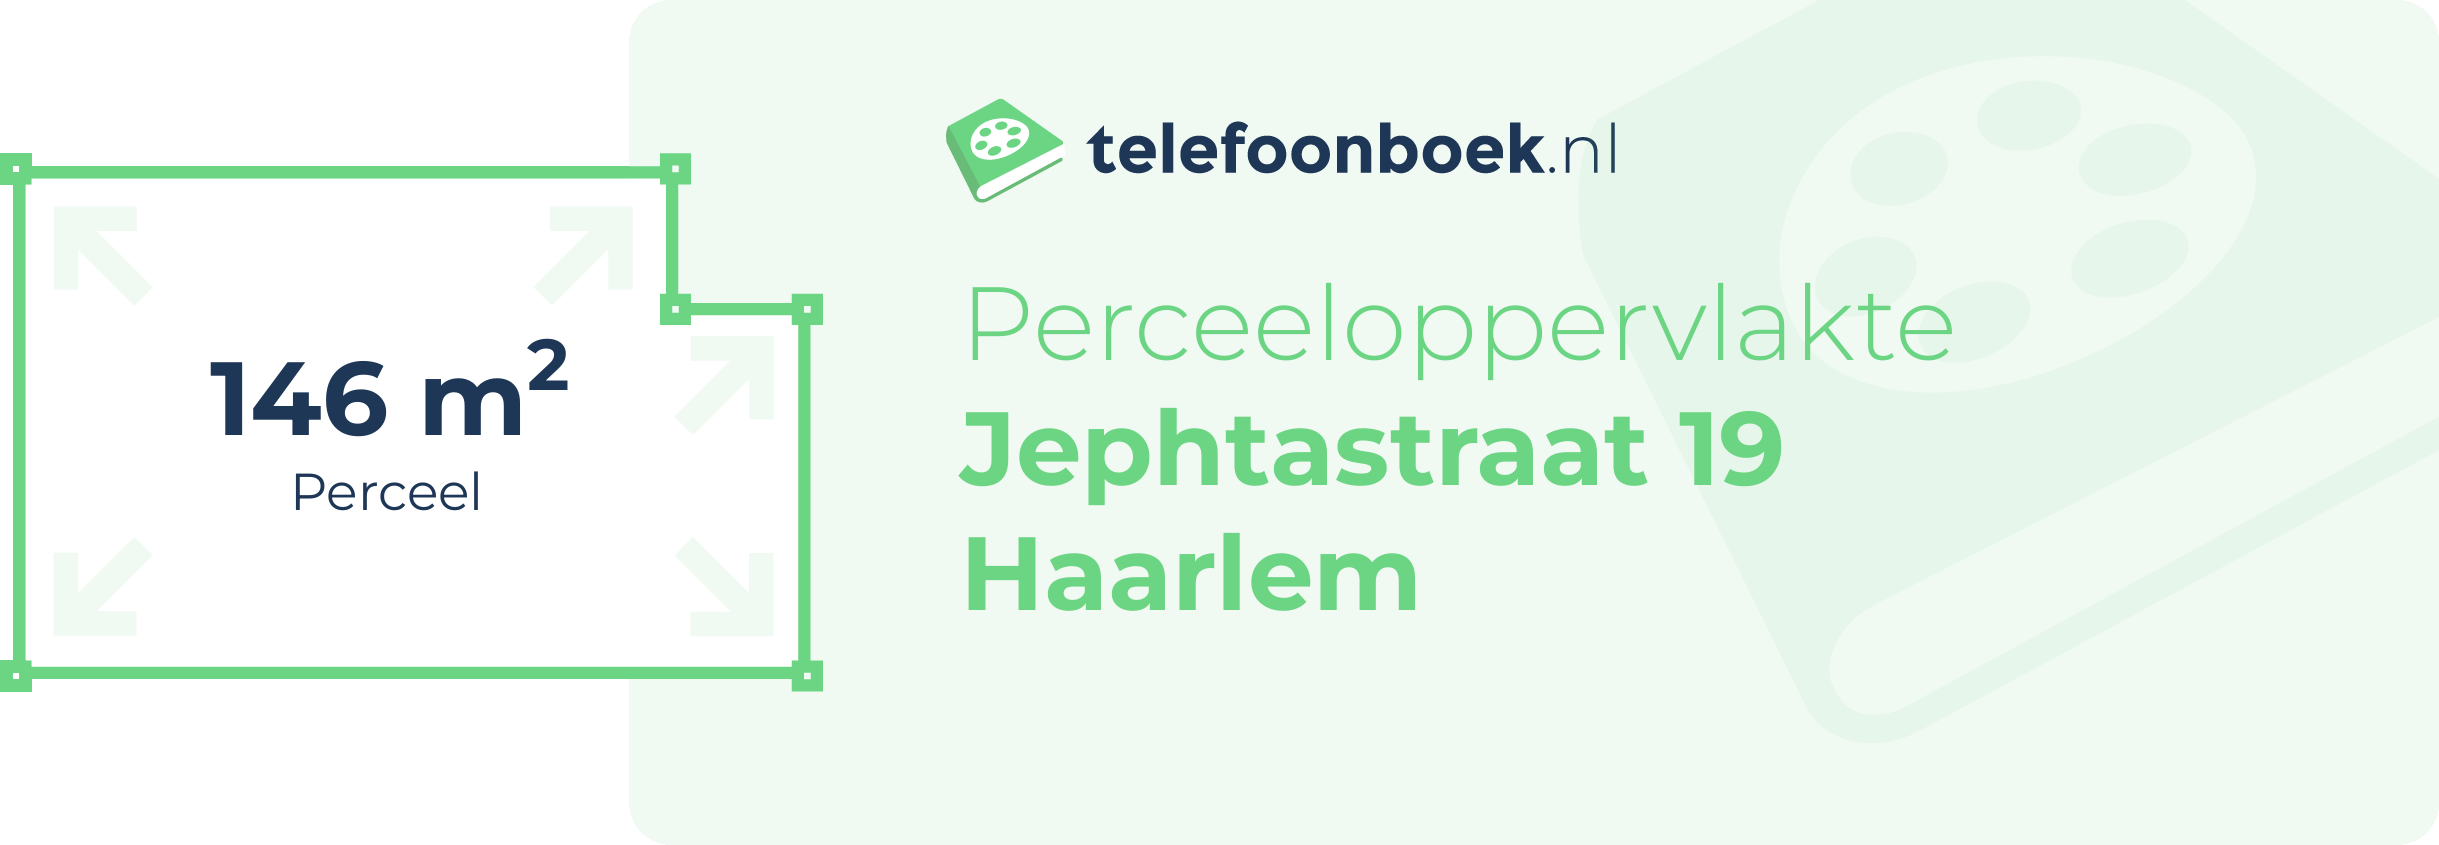 Perceeloppervlakte Jephtastraat 19 Haarlem